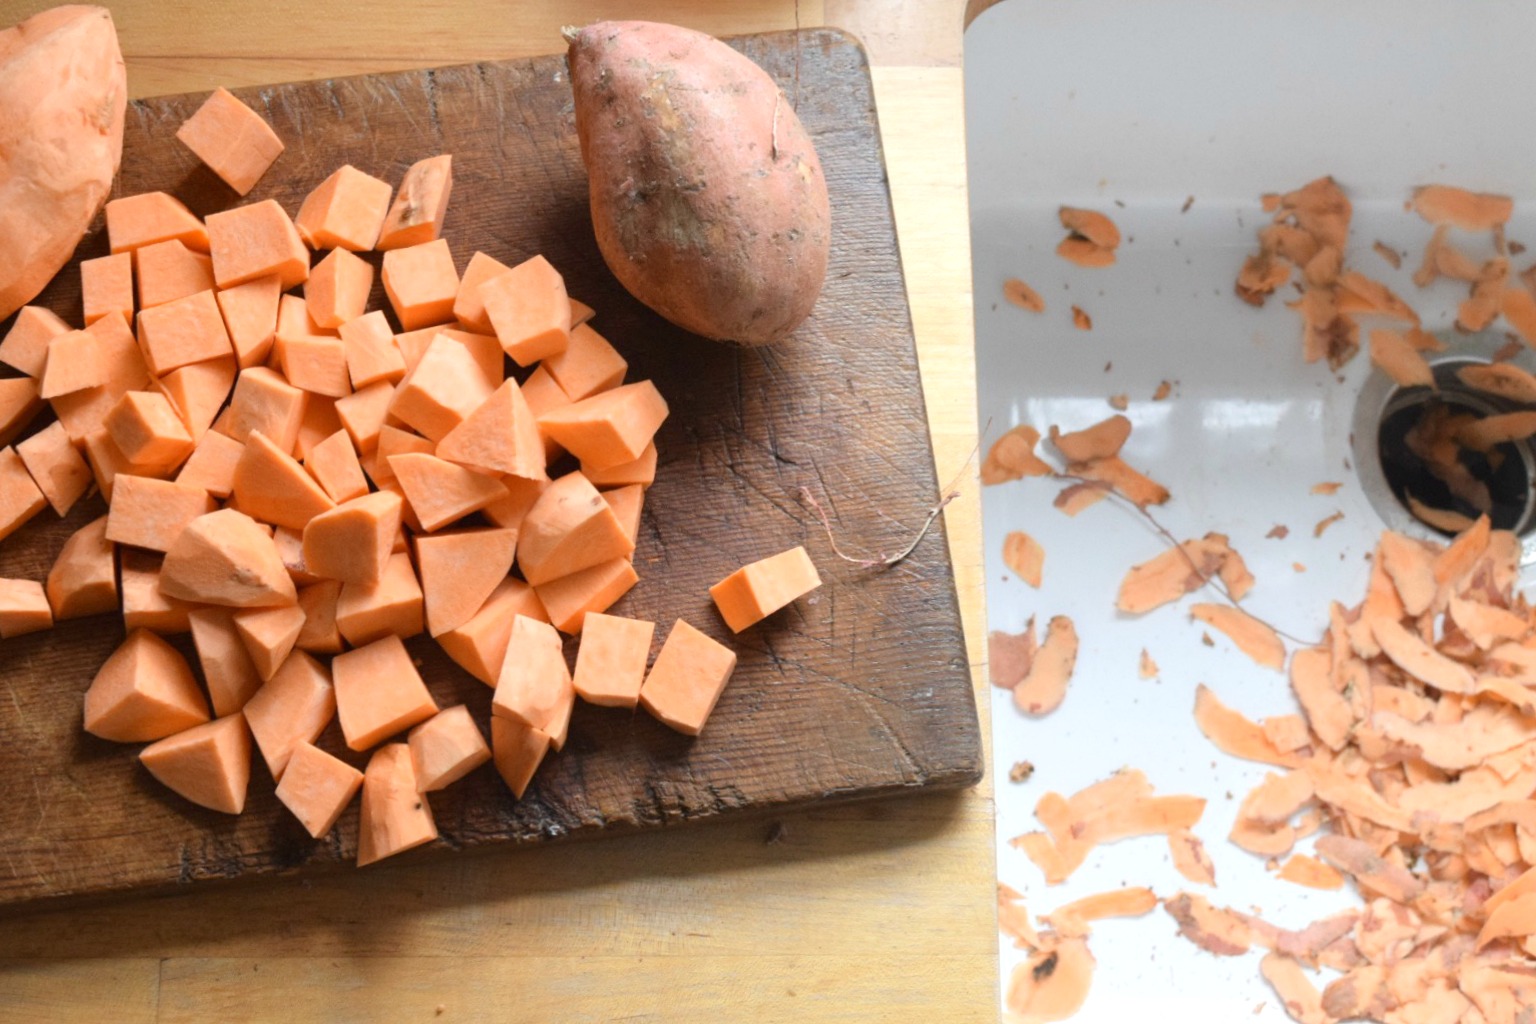 Paleo Sweet Potato Casserole- Healthy Thanksgiving Side